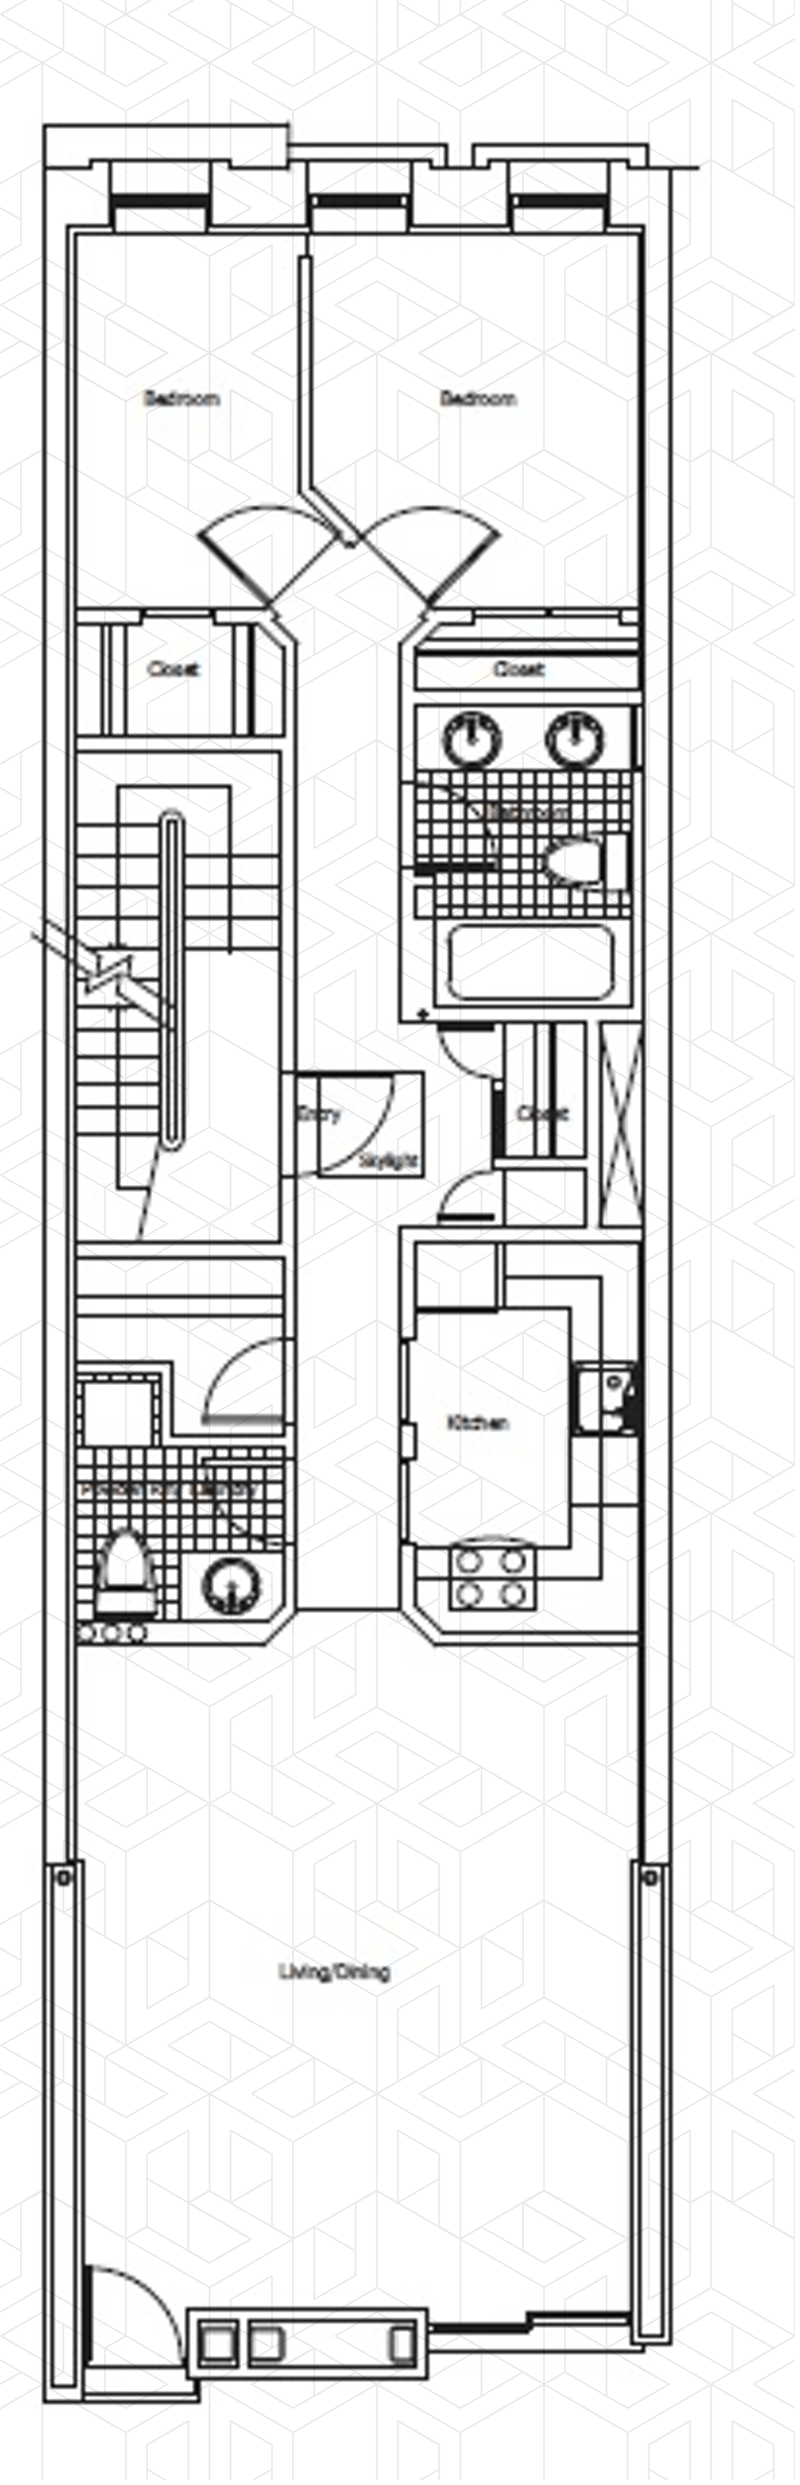 Floorplan for 146 West 130th Street, 3